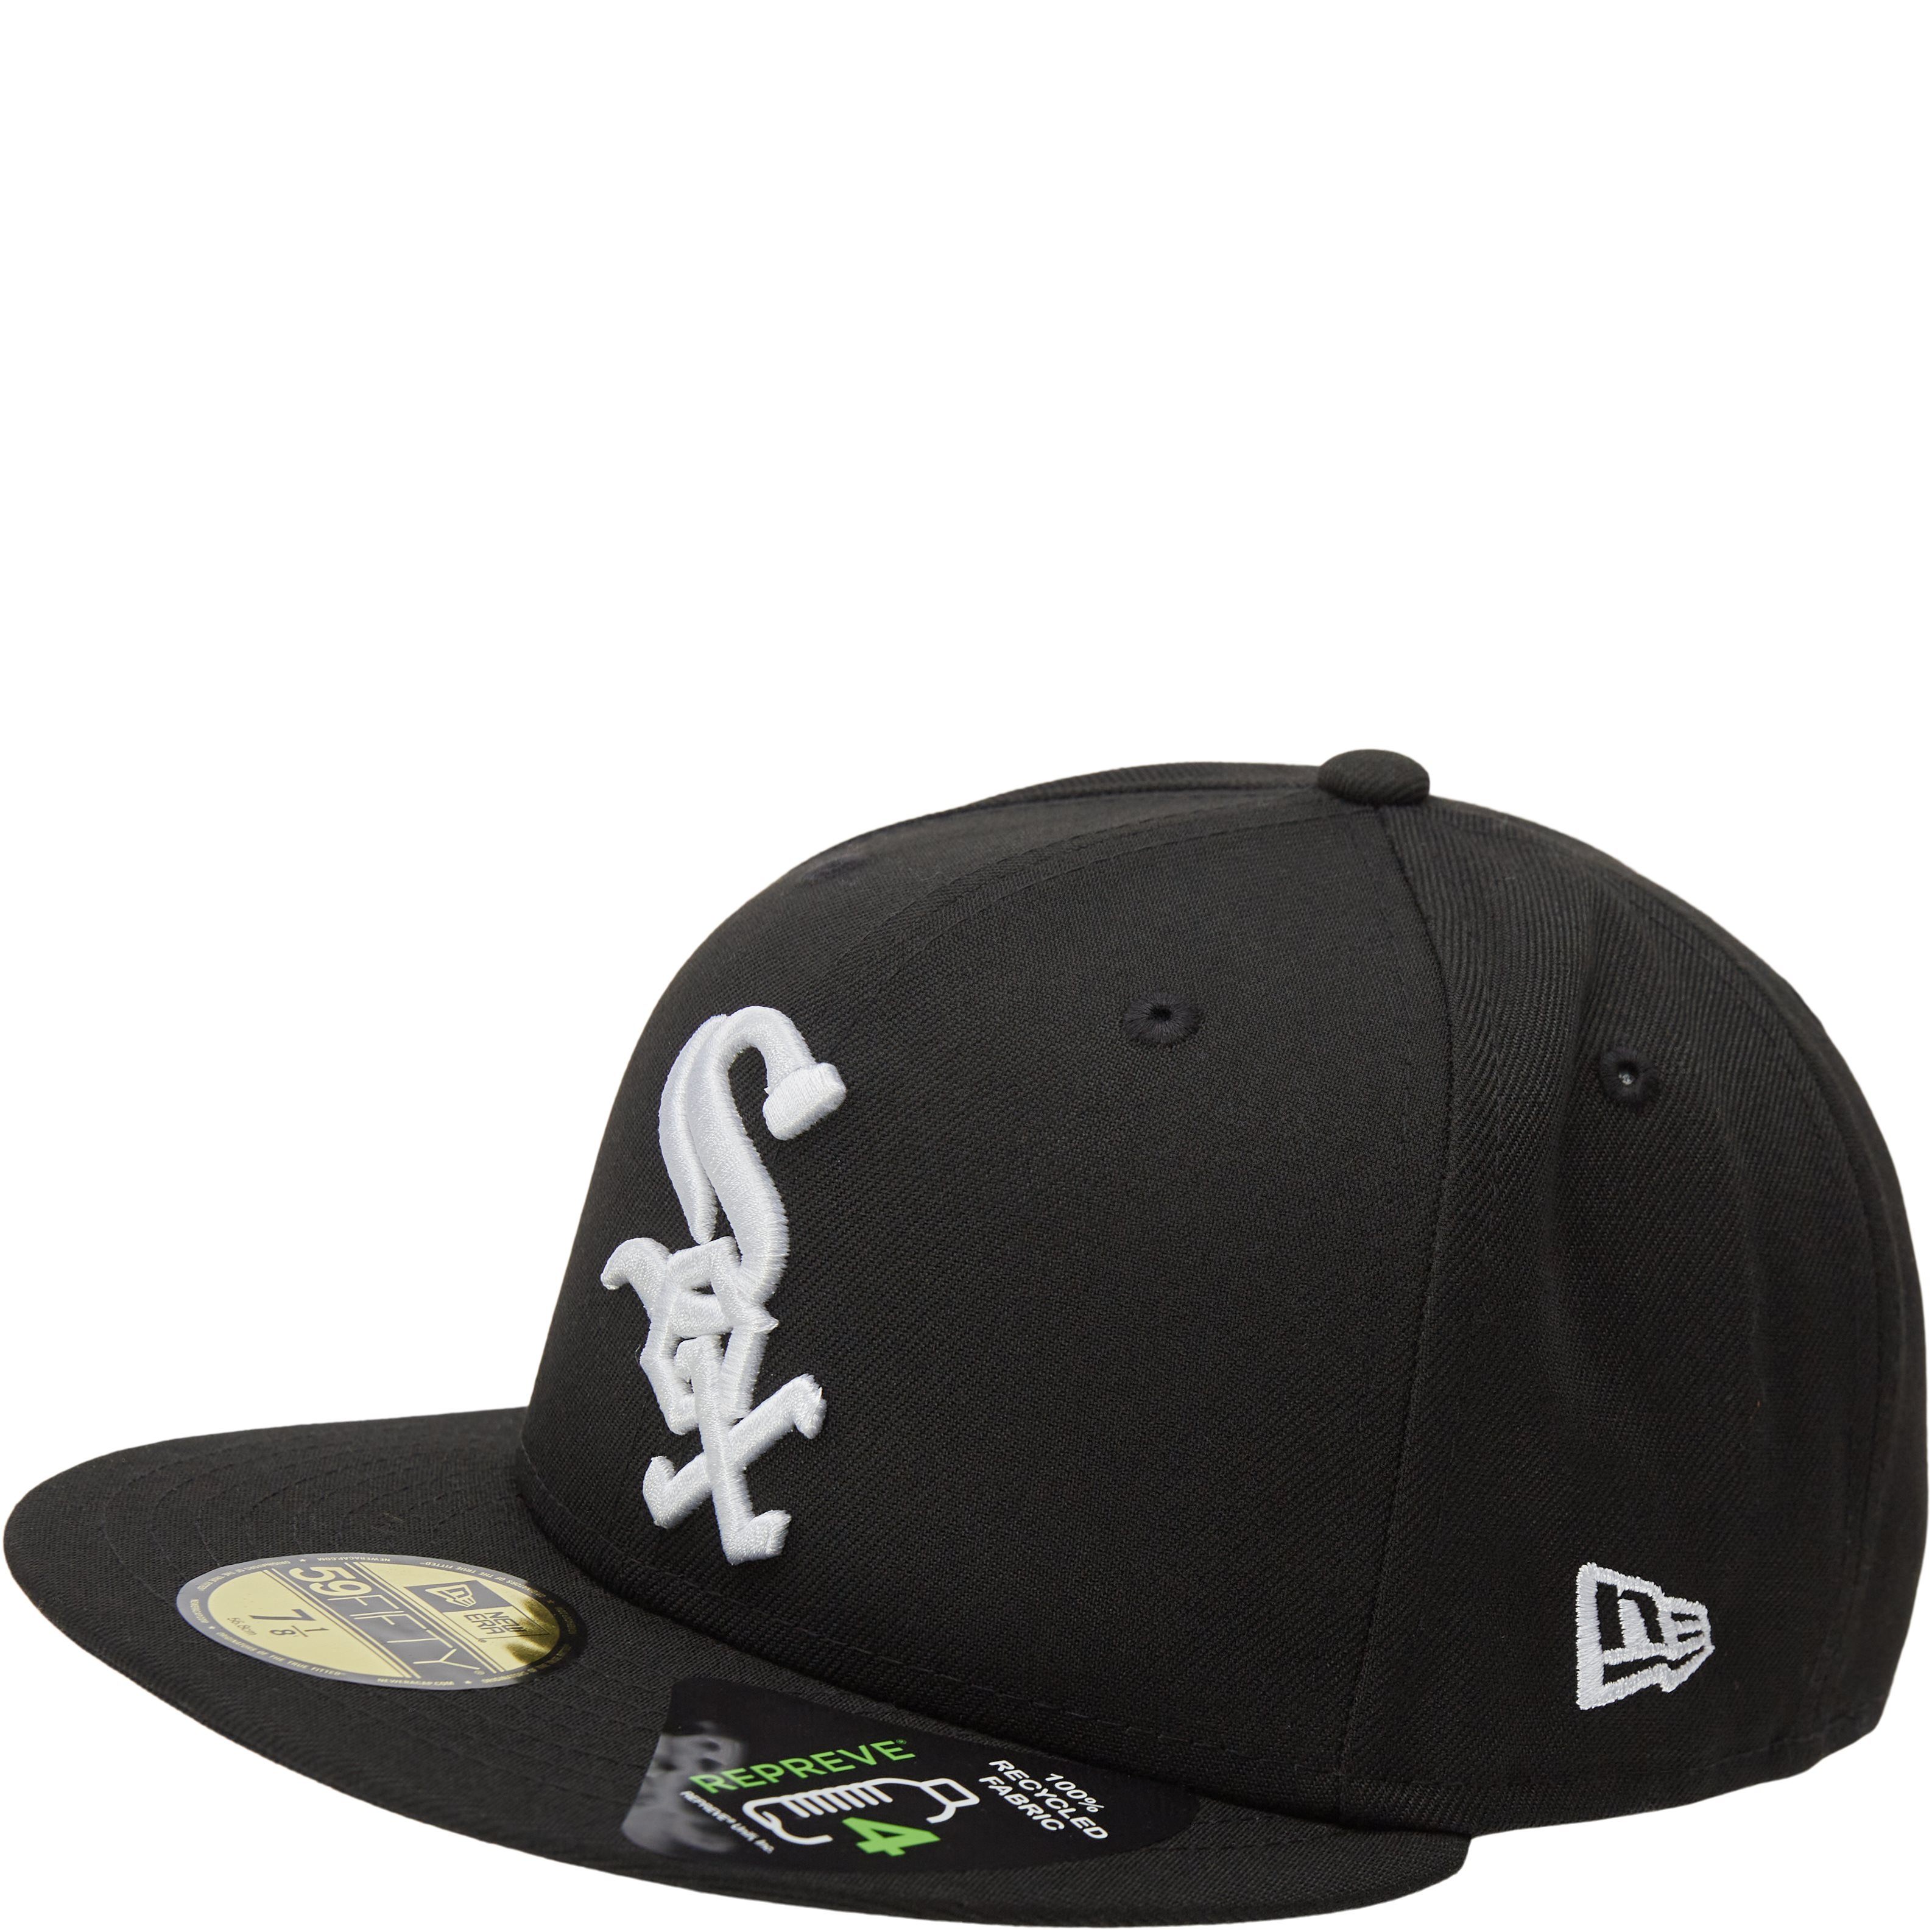 59 Fifty White Sox - Caps - Black